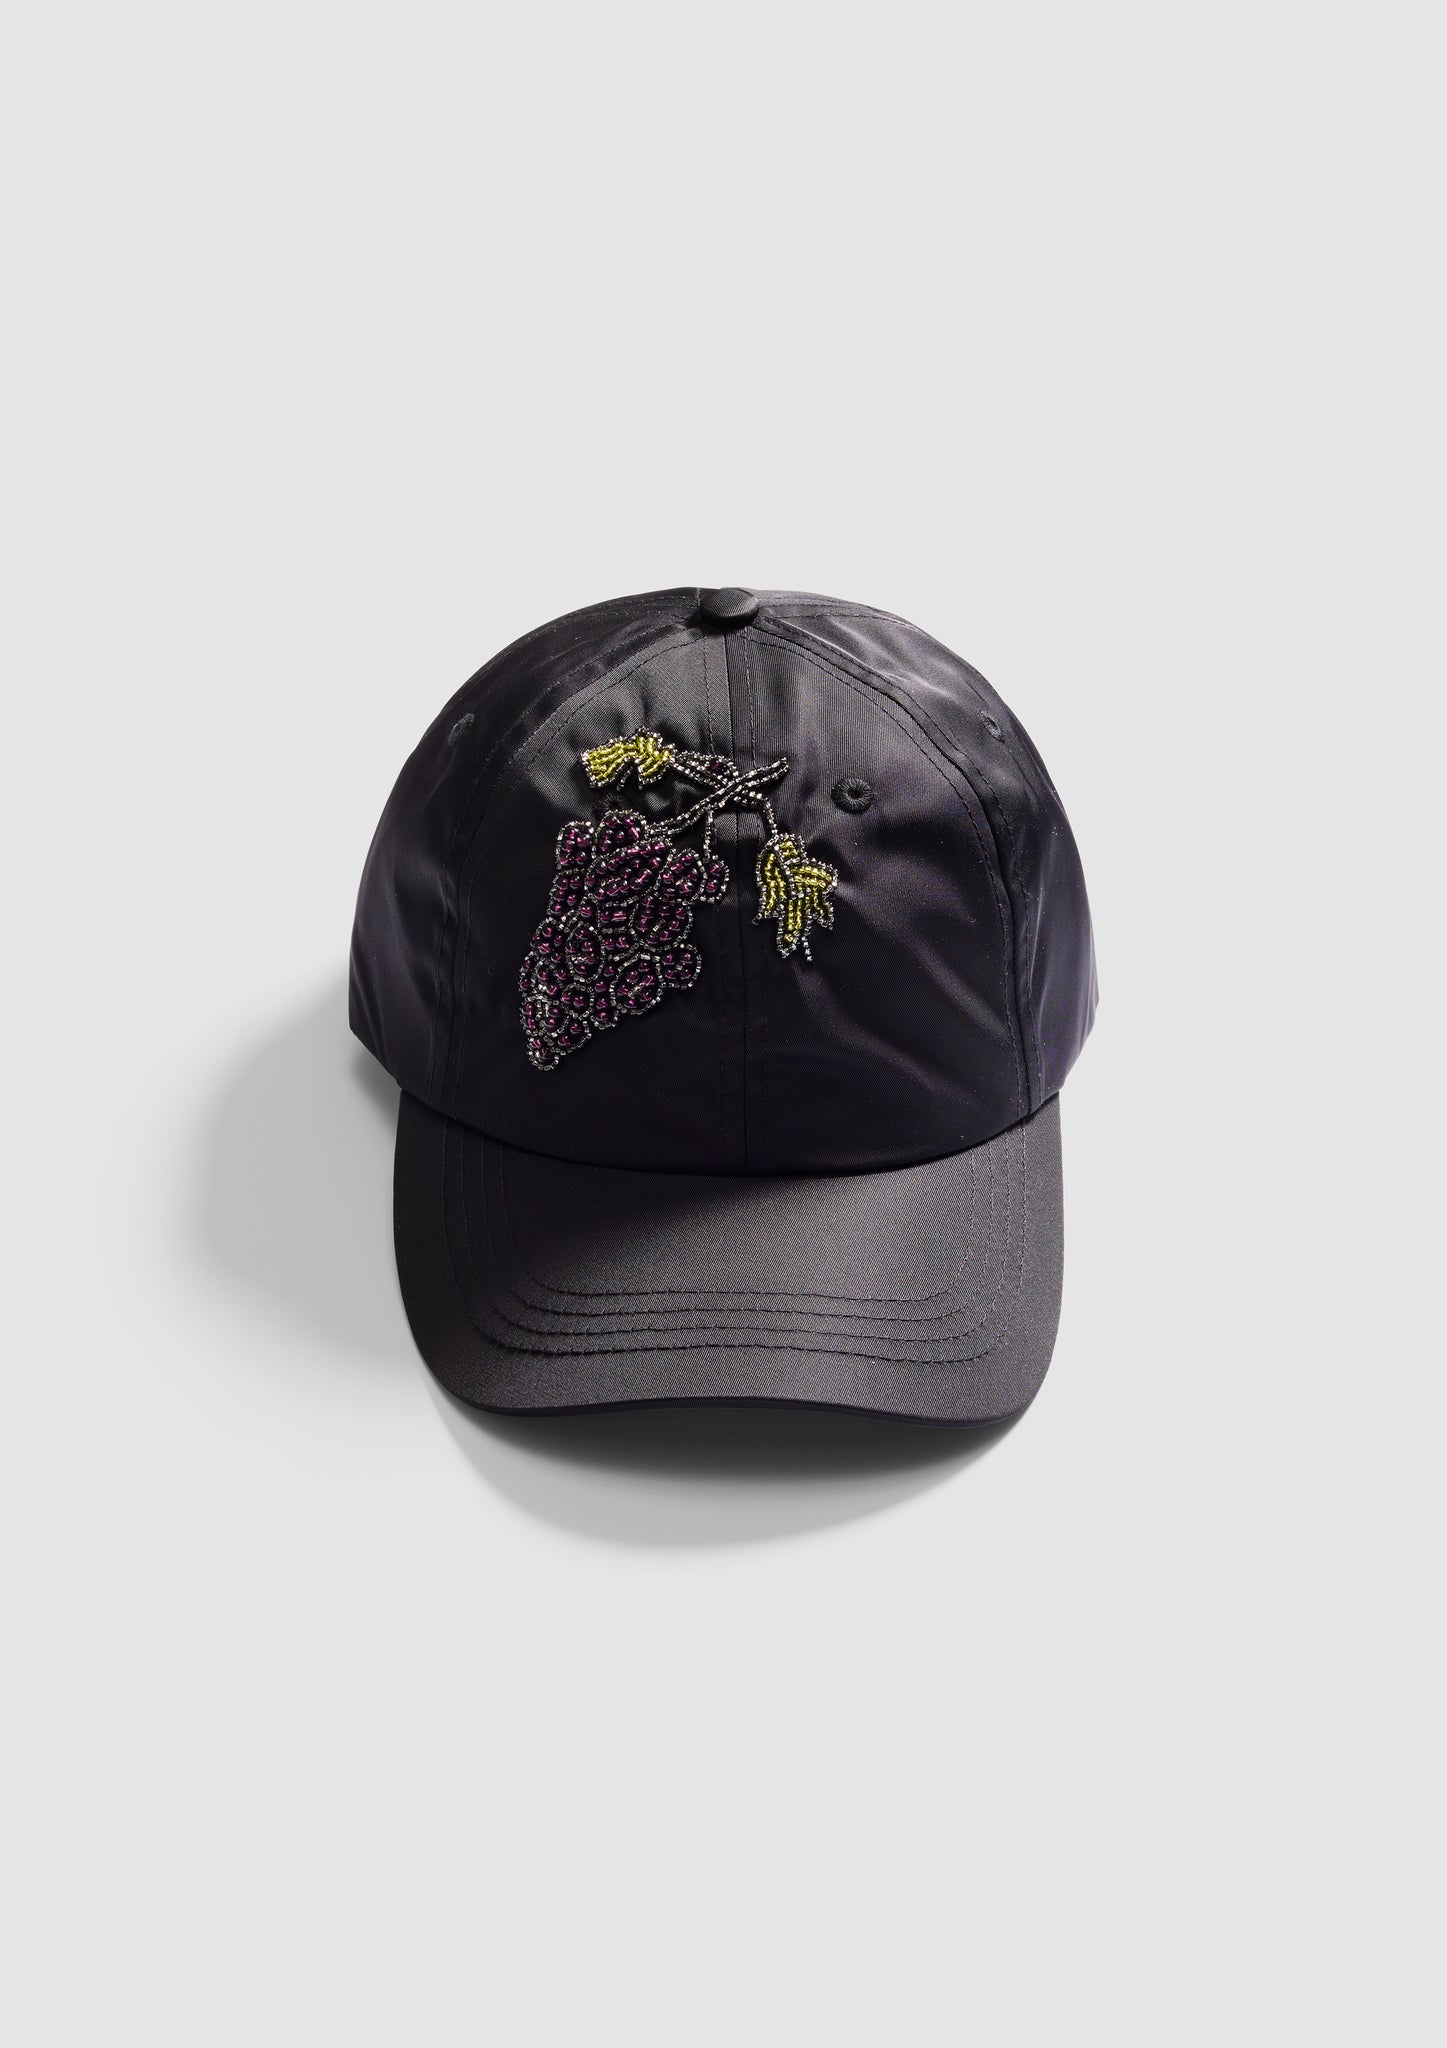 Grape Cap